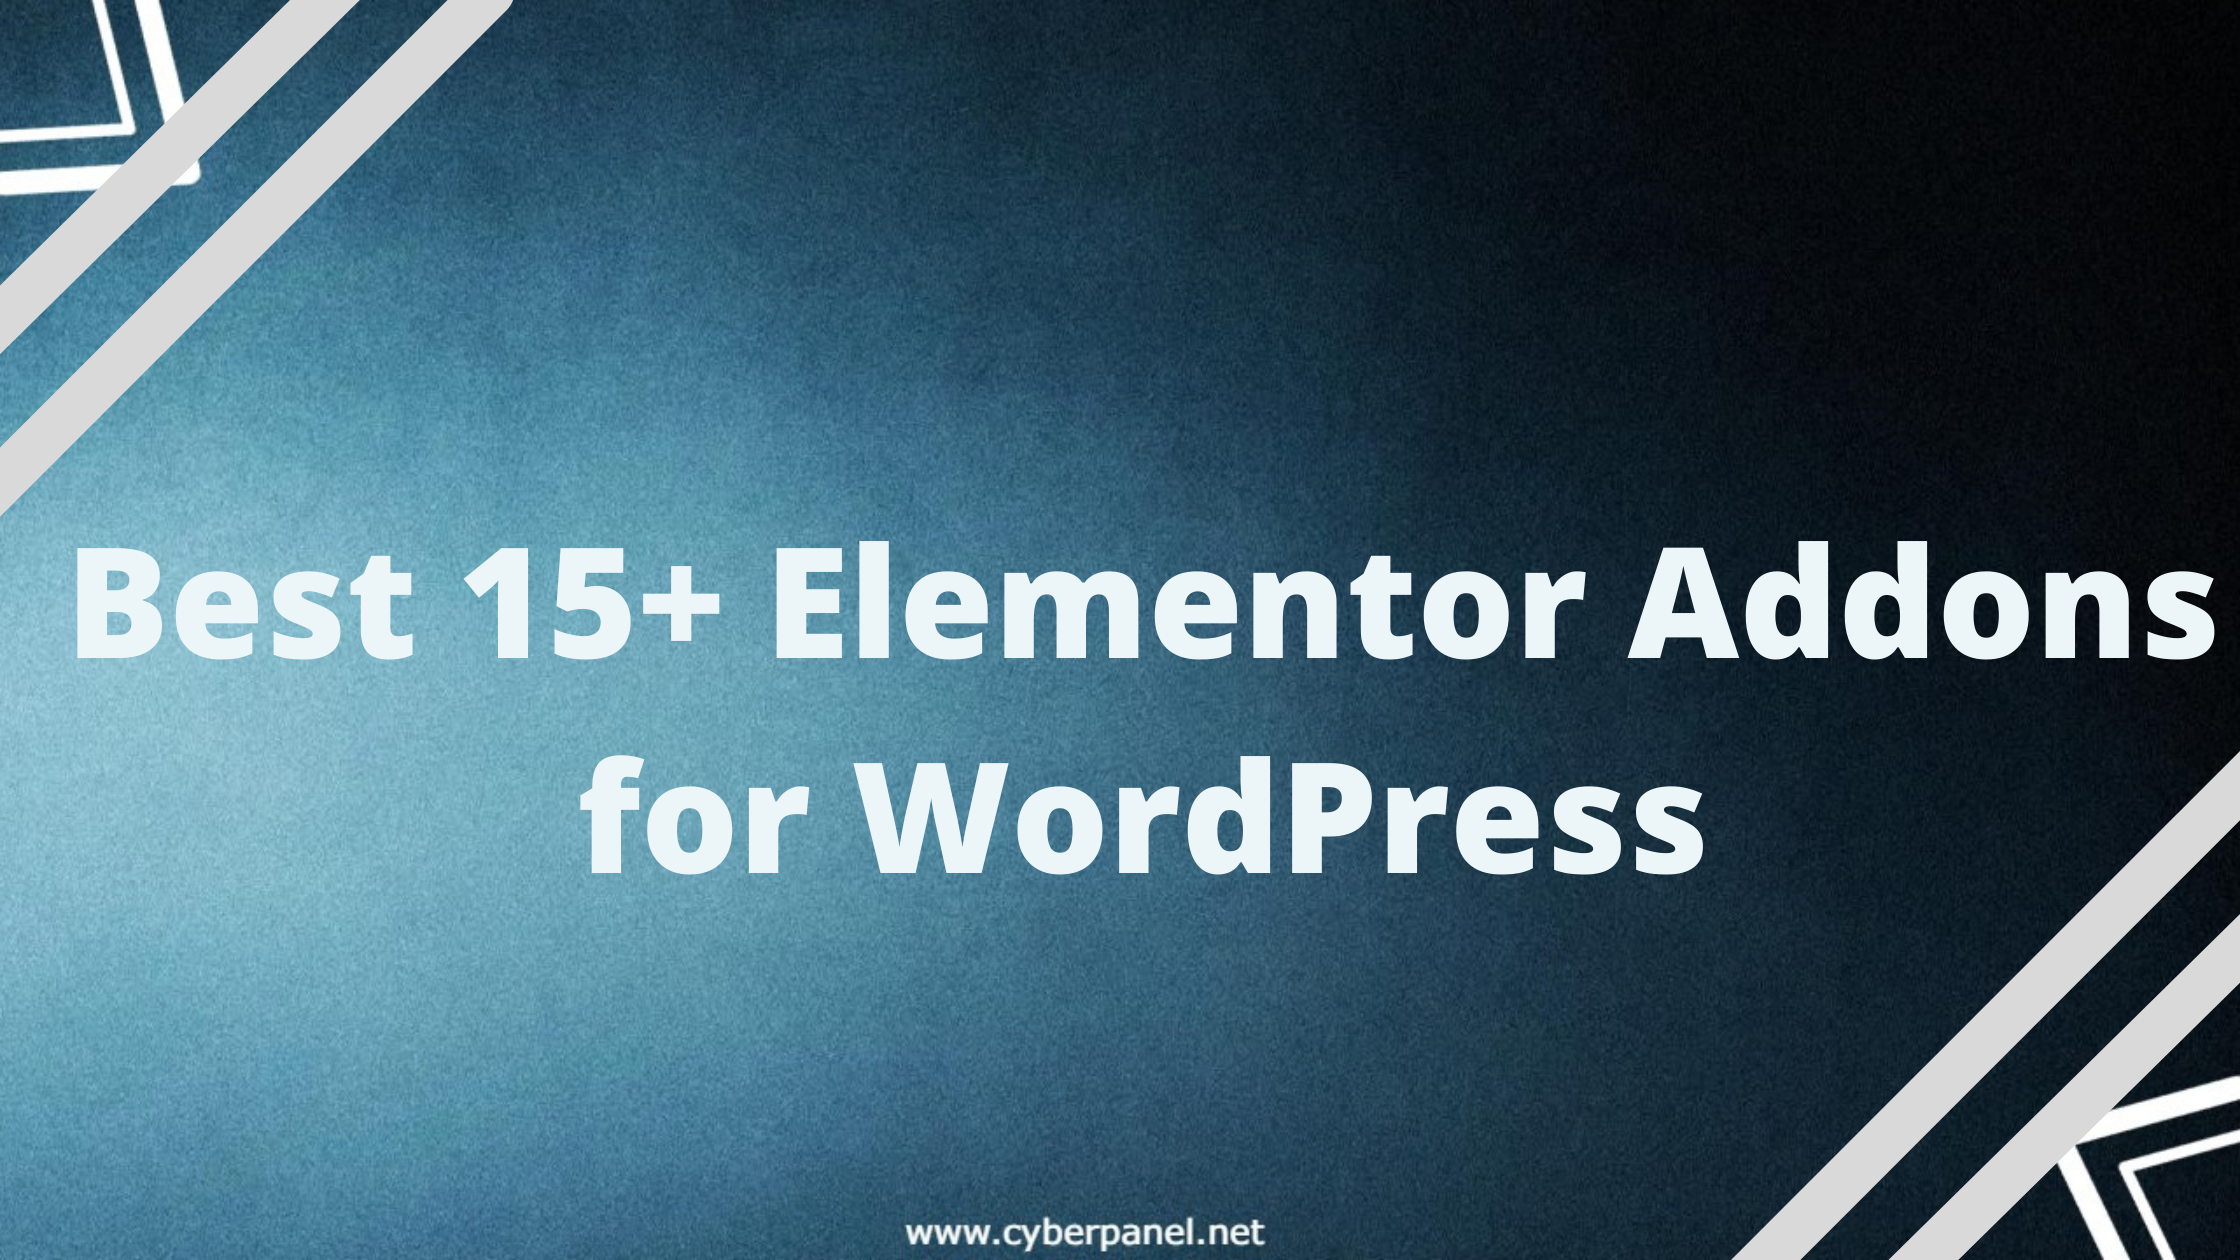 Best 15+ Elementor Addons for WordPress